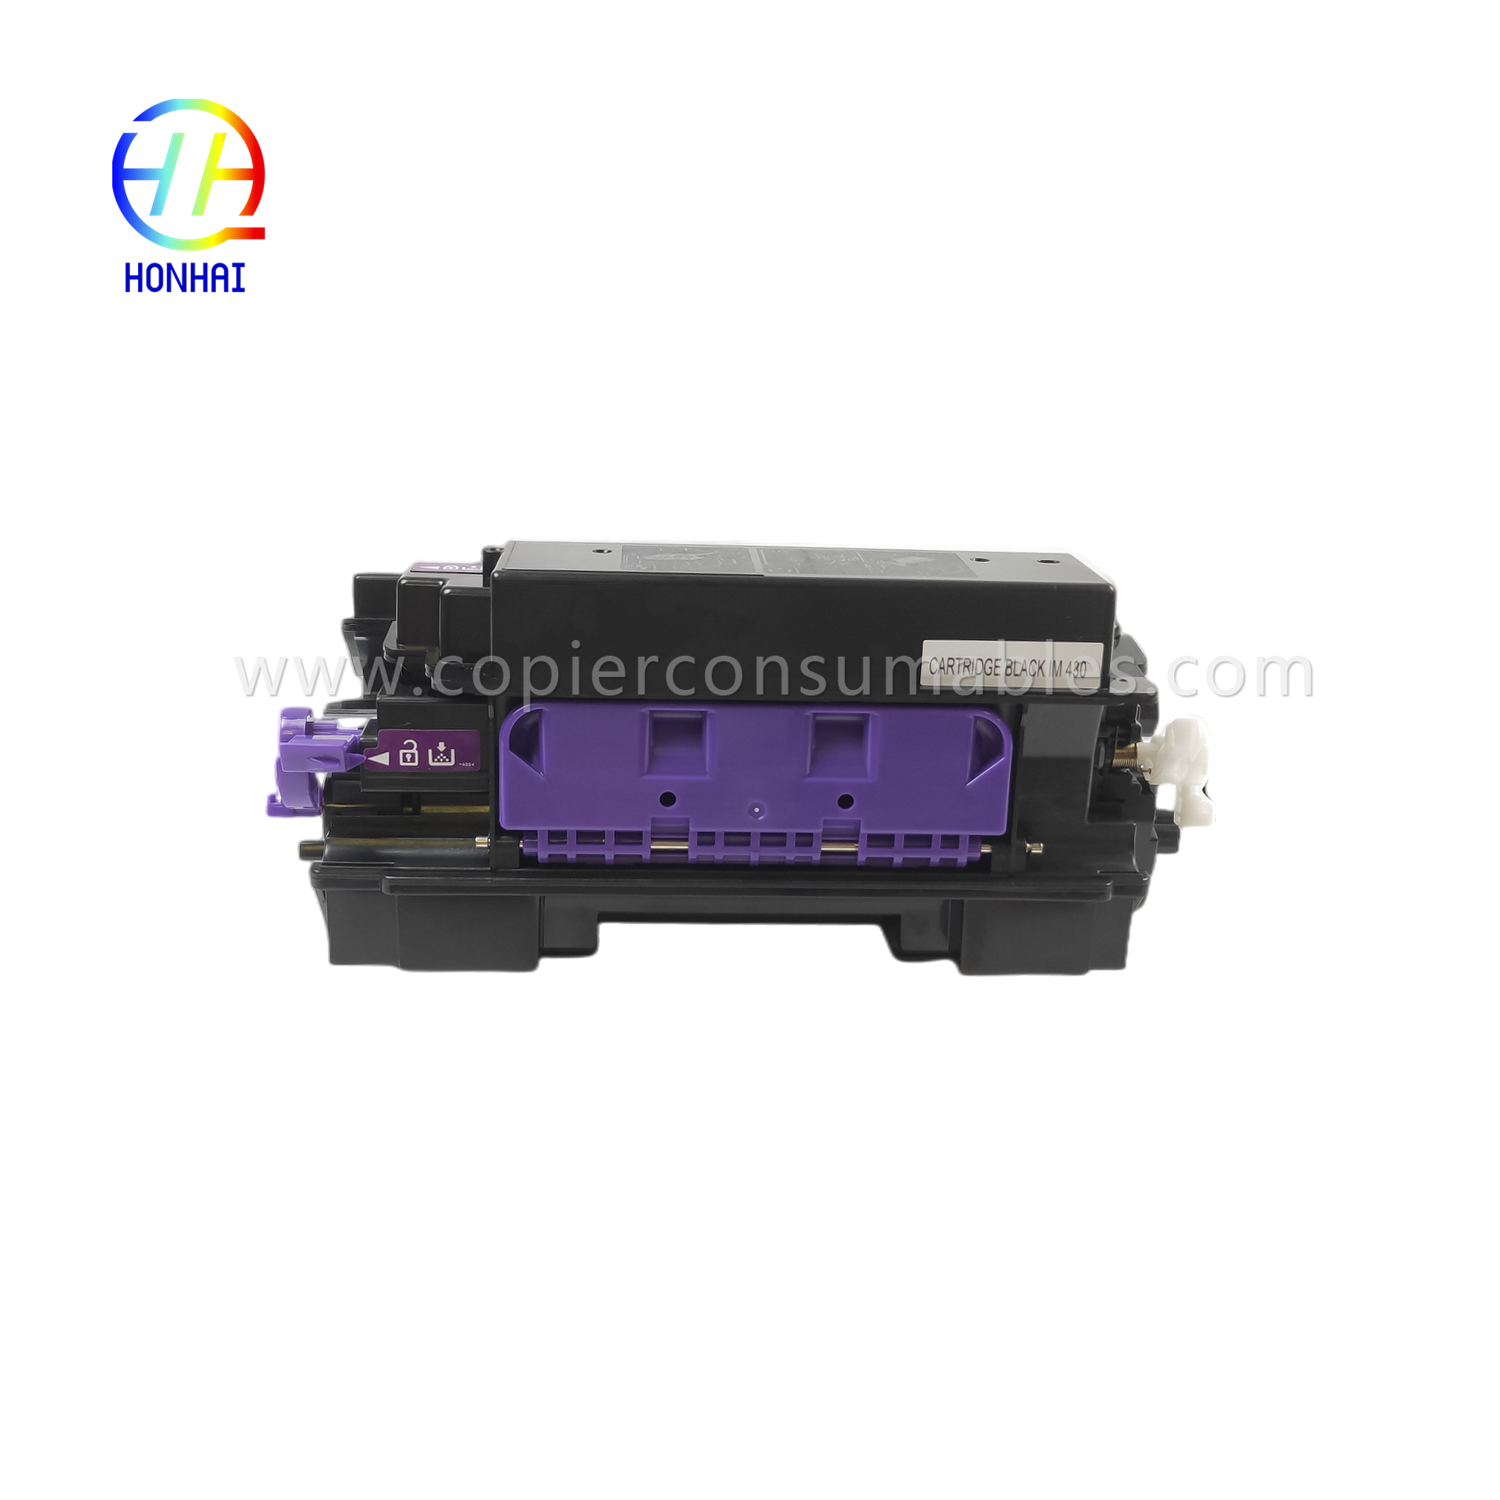 https://www.copierconsumables.com/toner-cartridge-zwart-voor-ricoh-418127-im430-im430f-im430fb-product/